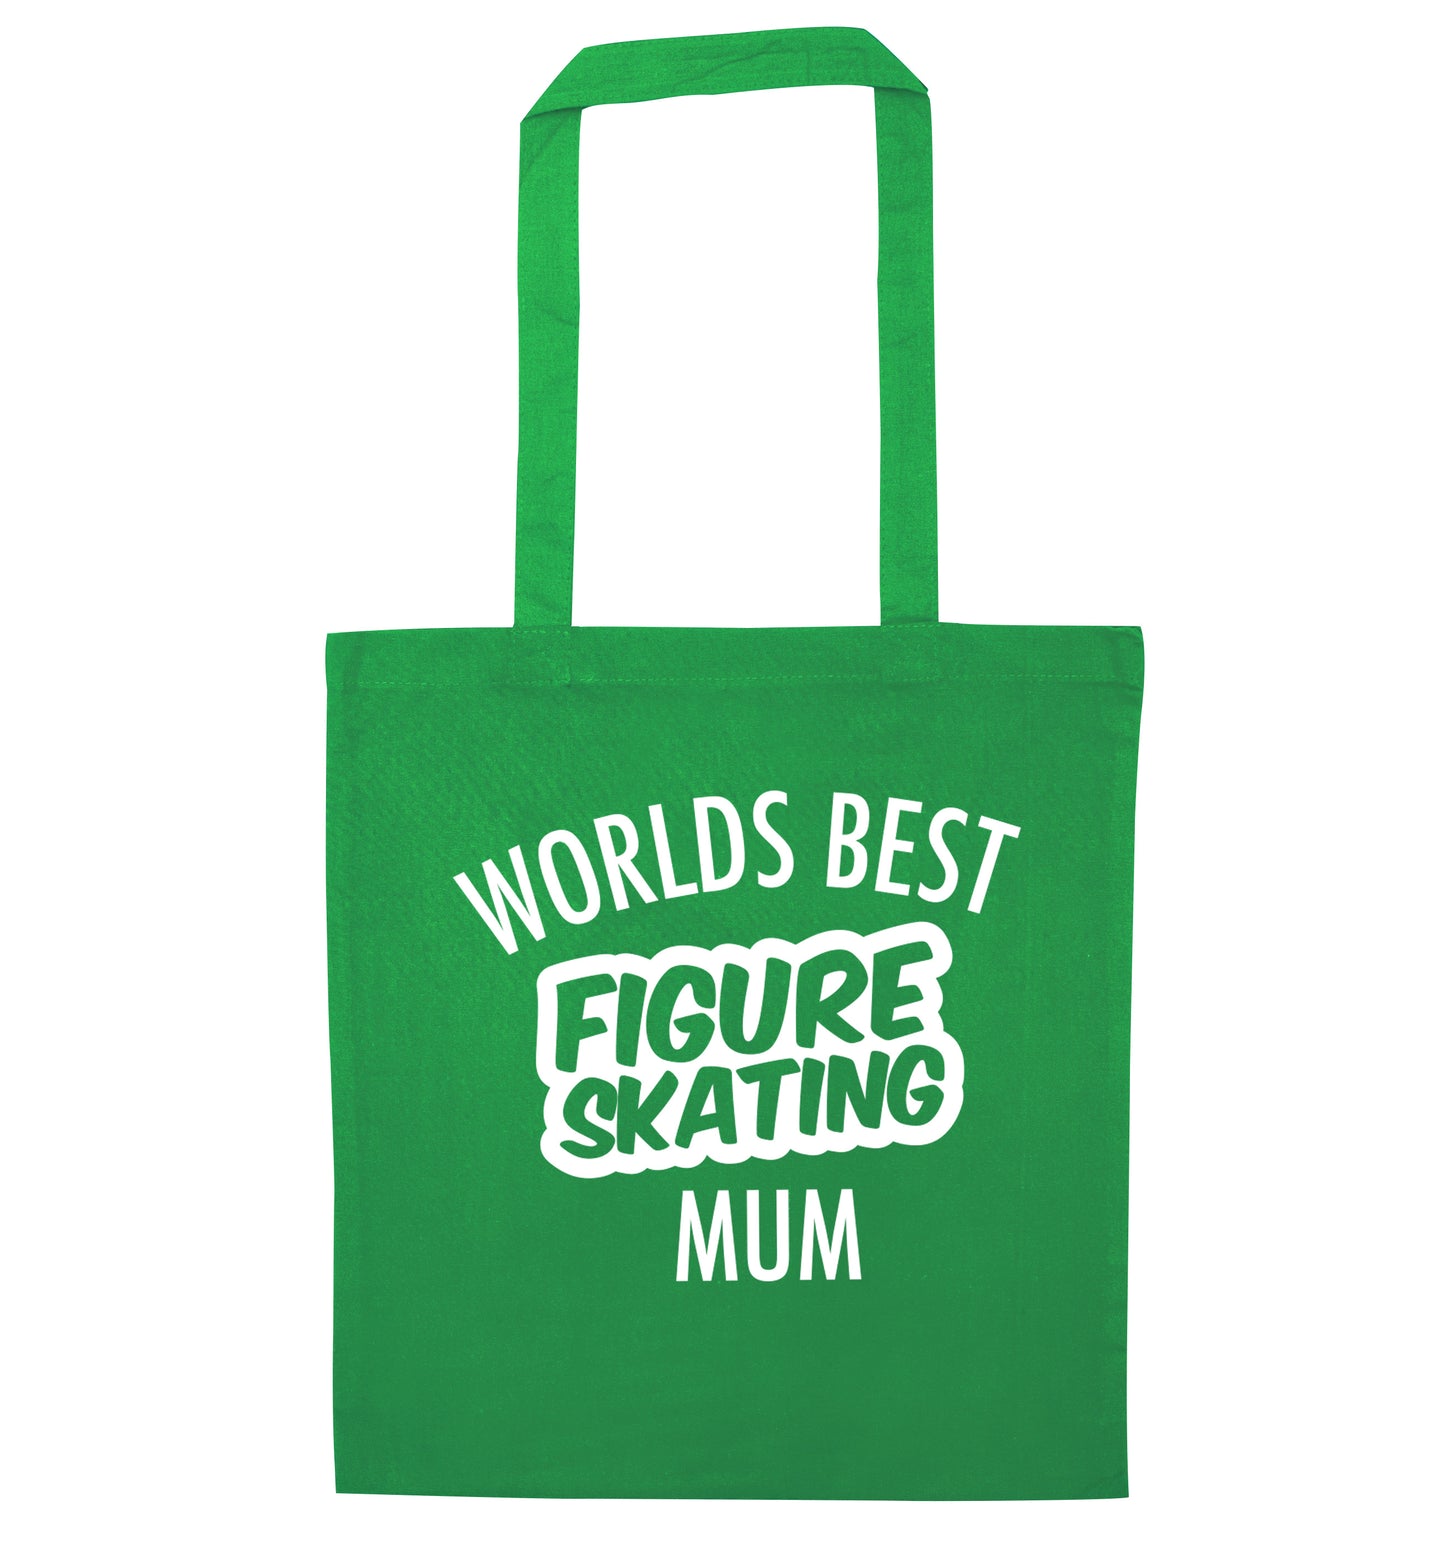 Worlds best figure skating mum green tote bag